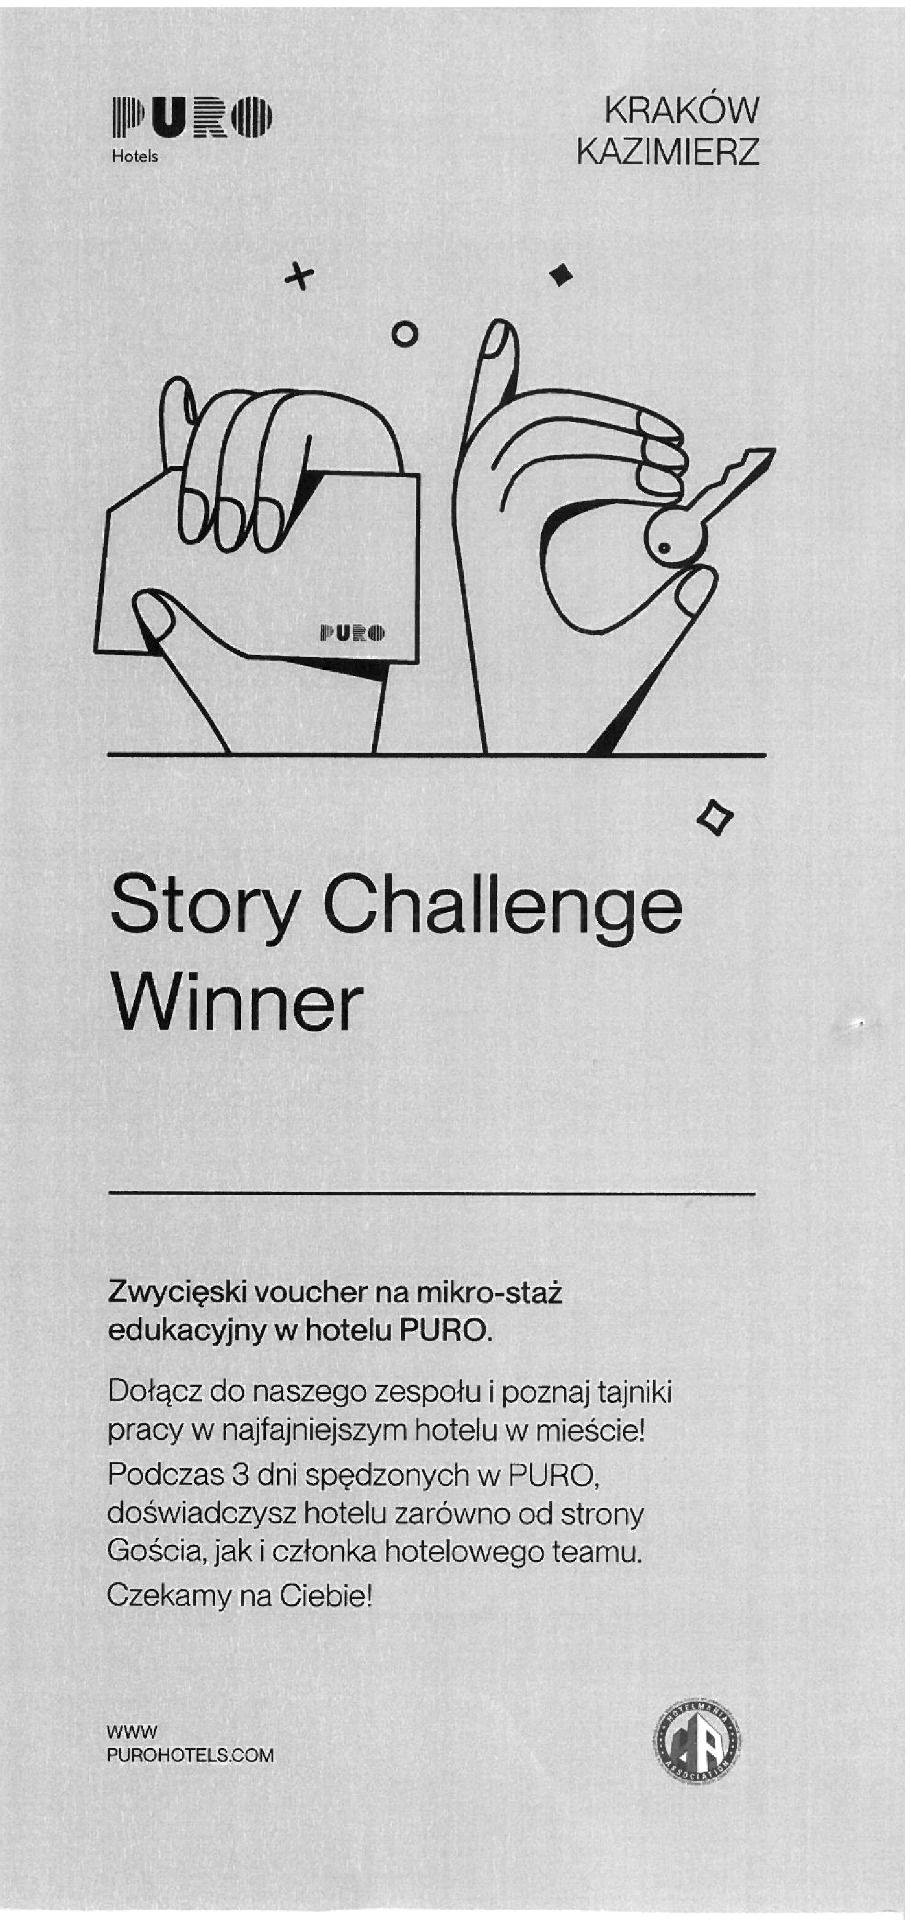 Story Challenge Winner